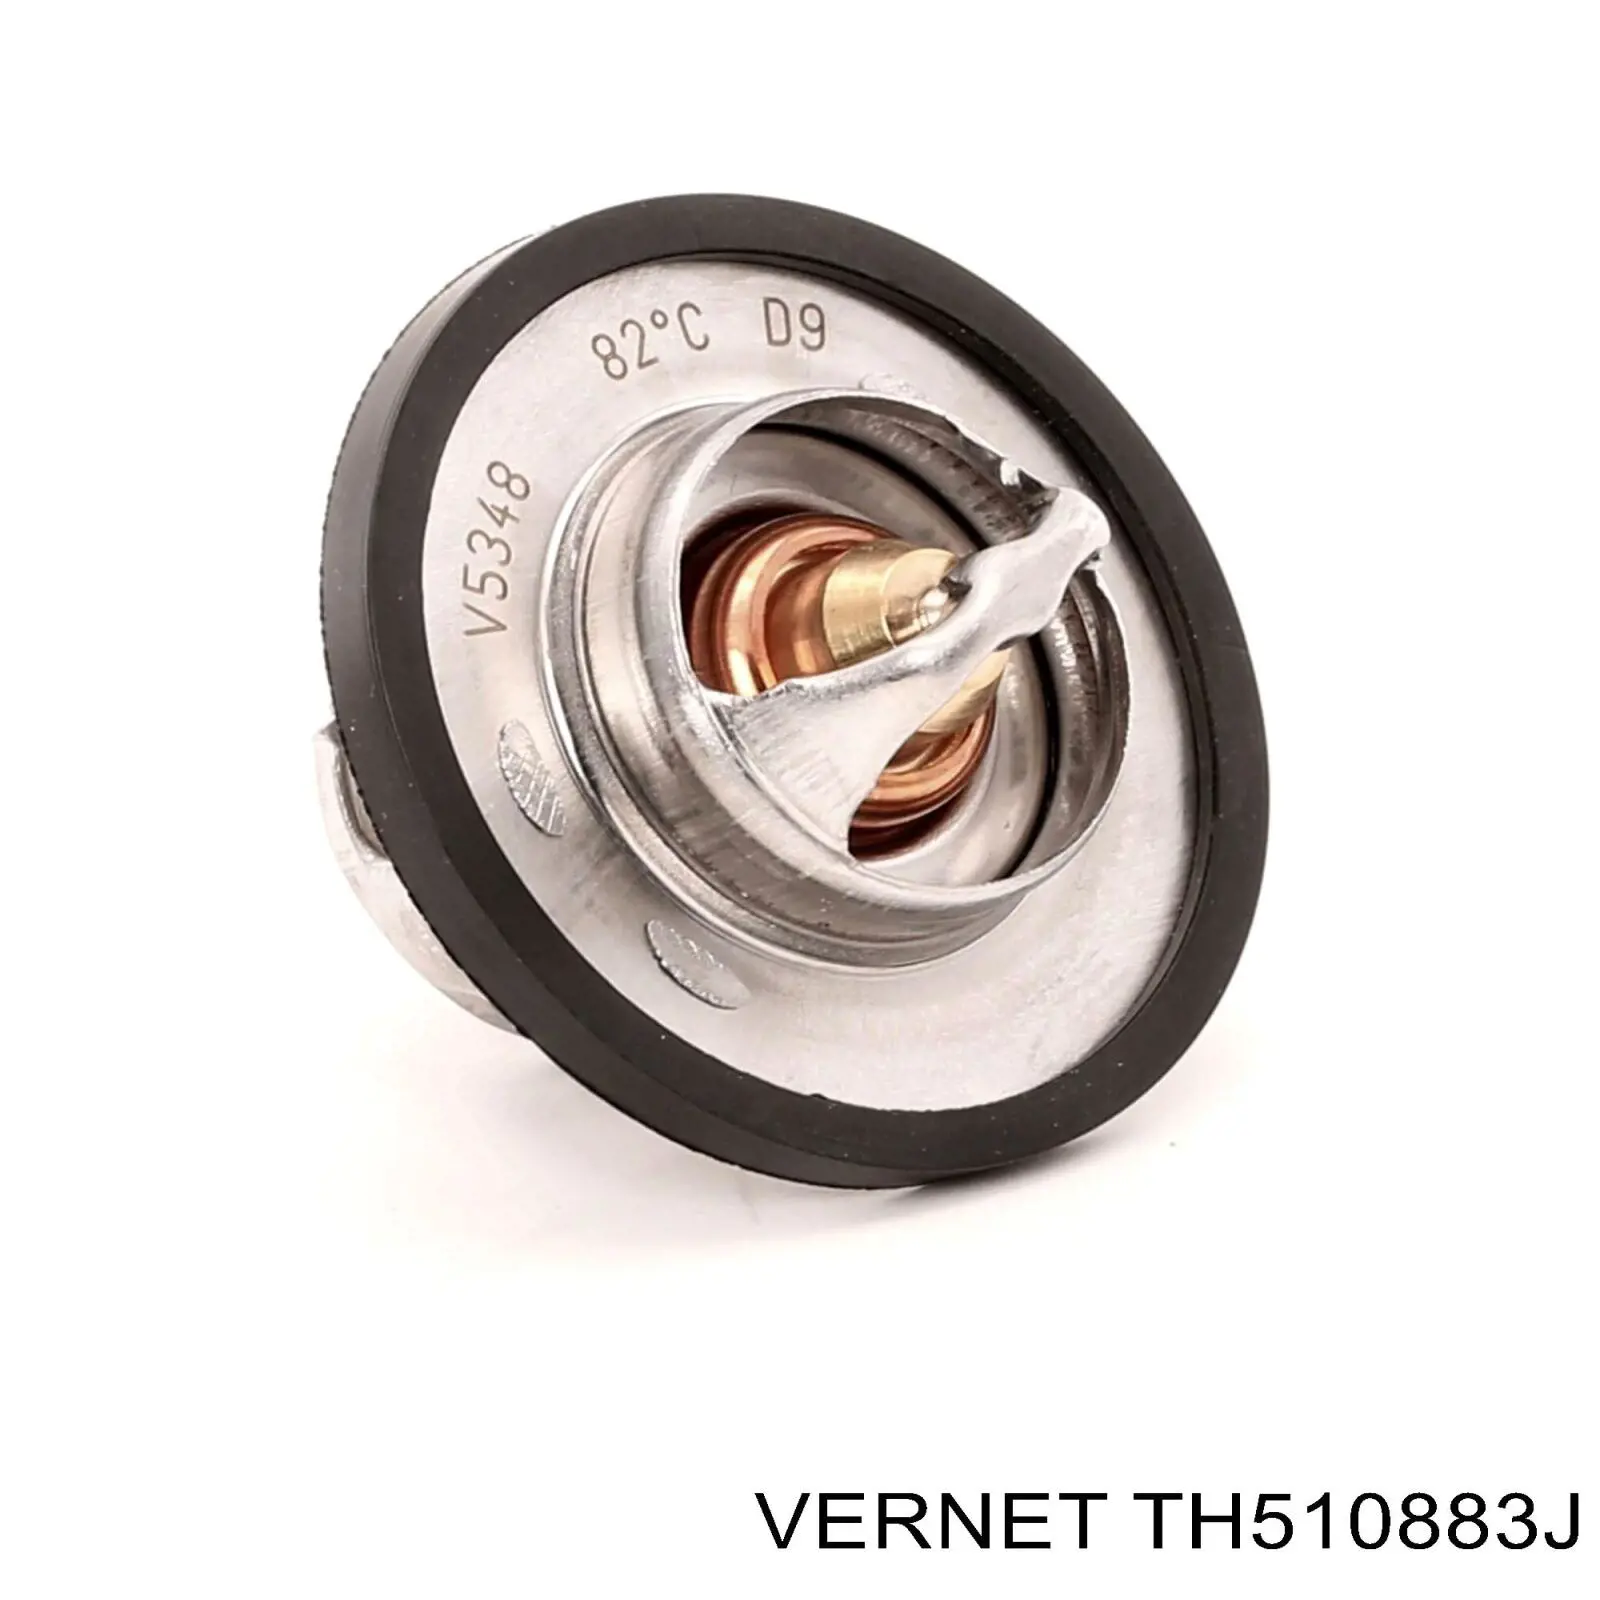 TH5108.83J Vernet termostato